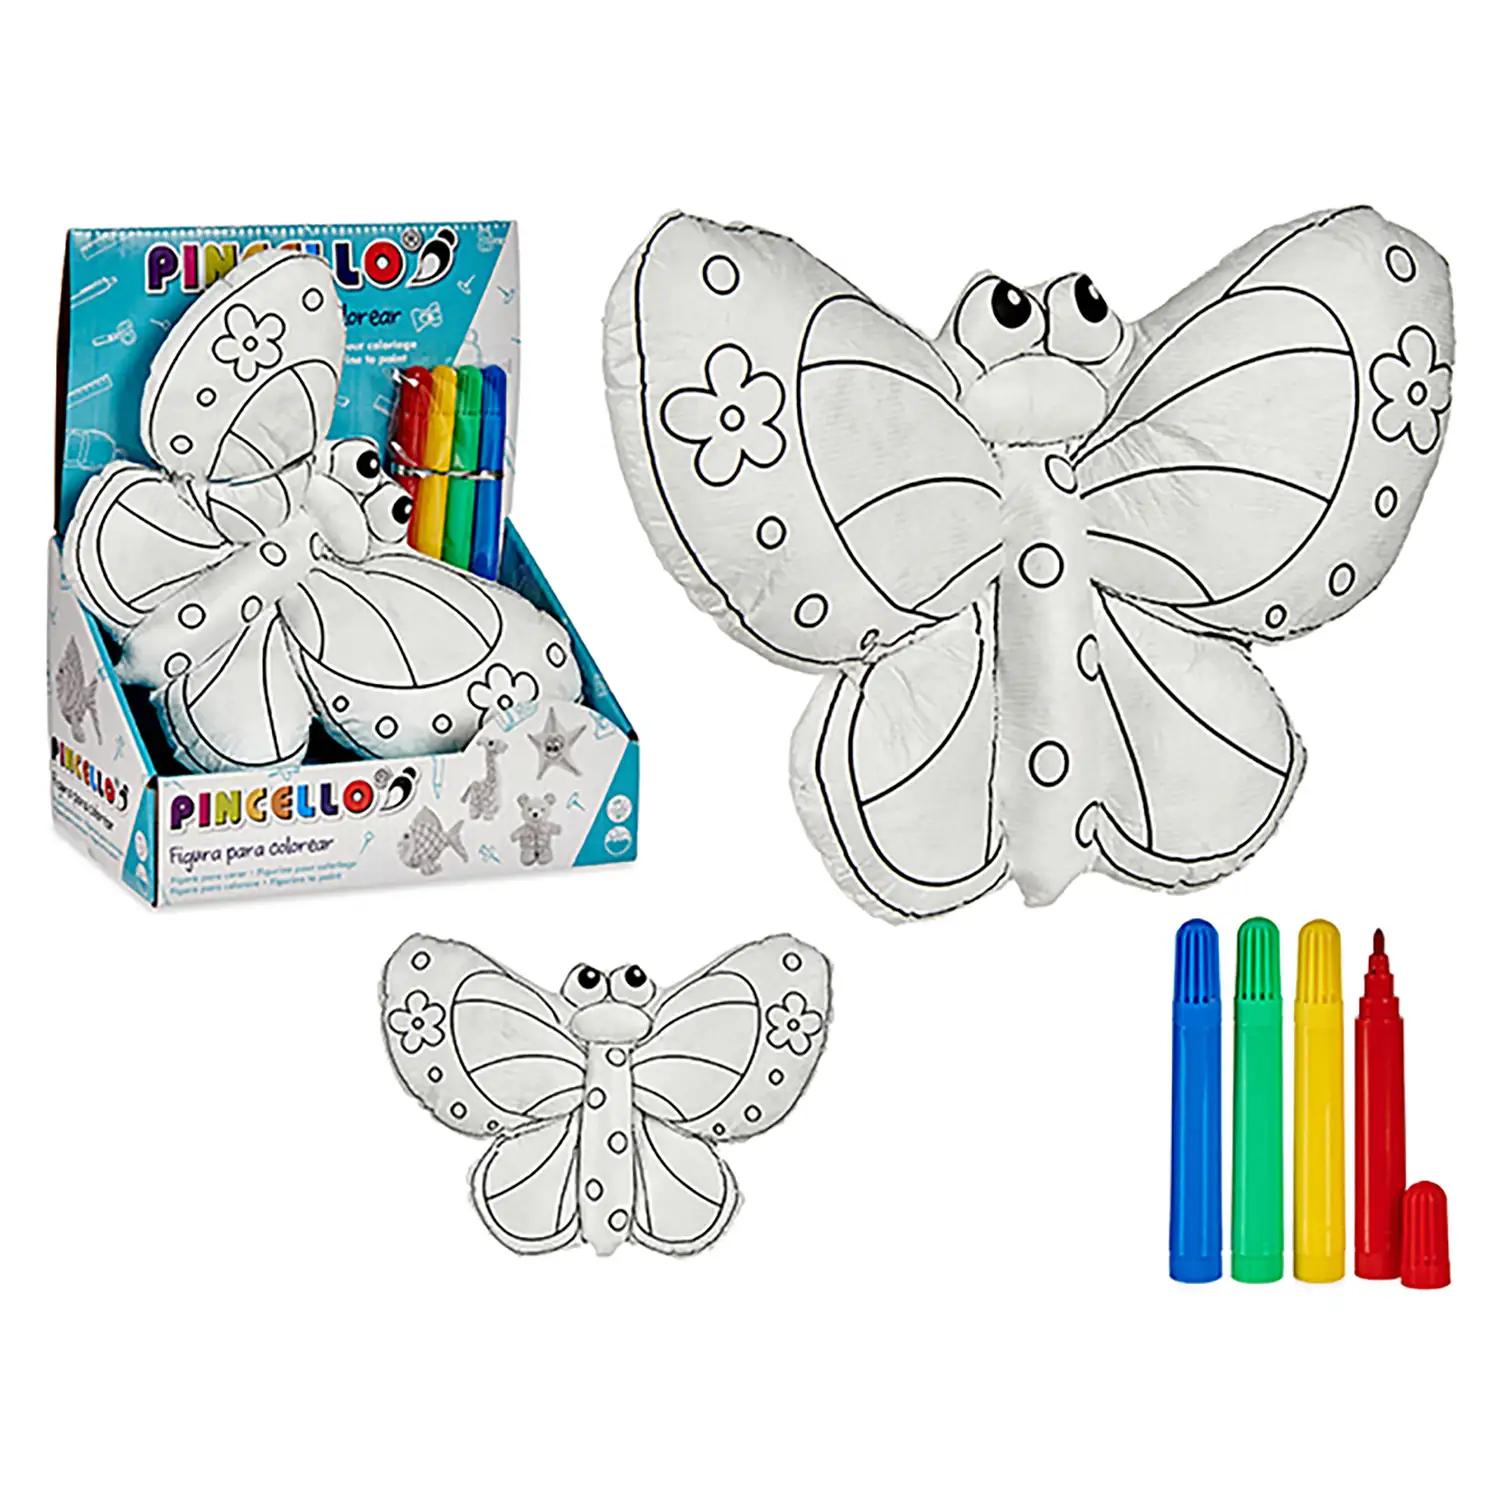 Peluche para pintar diseño mariposa.